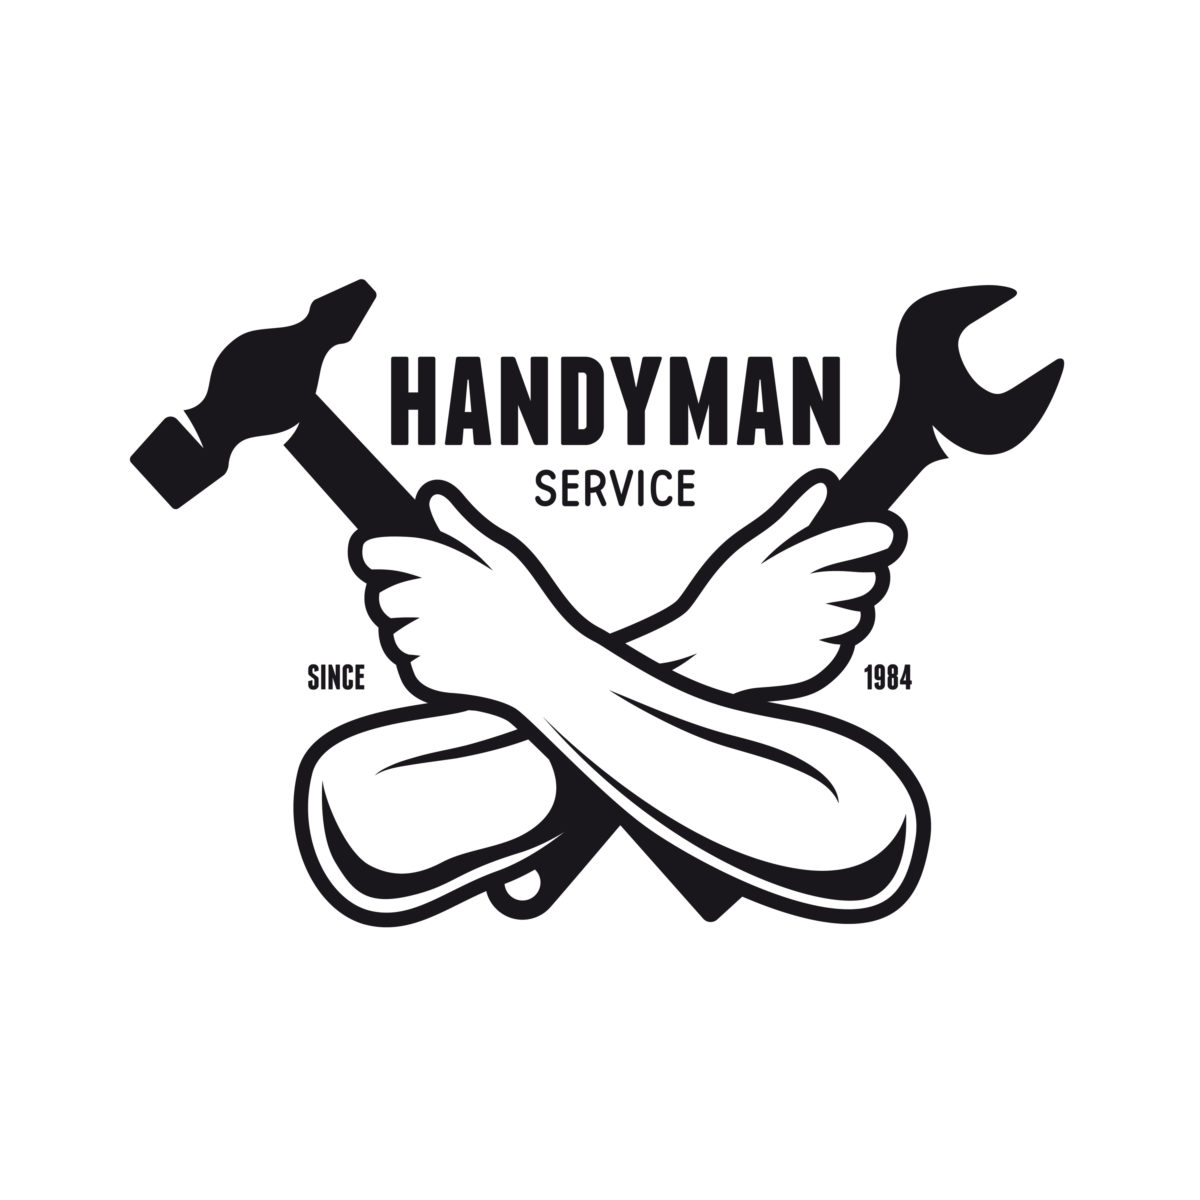 Are you a Good Handyman?